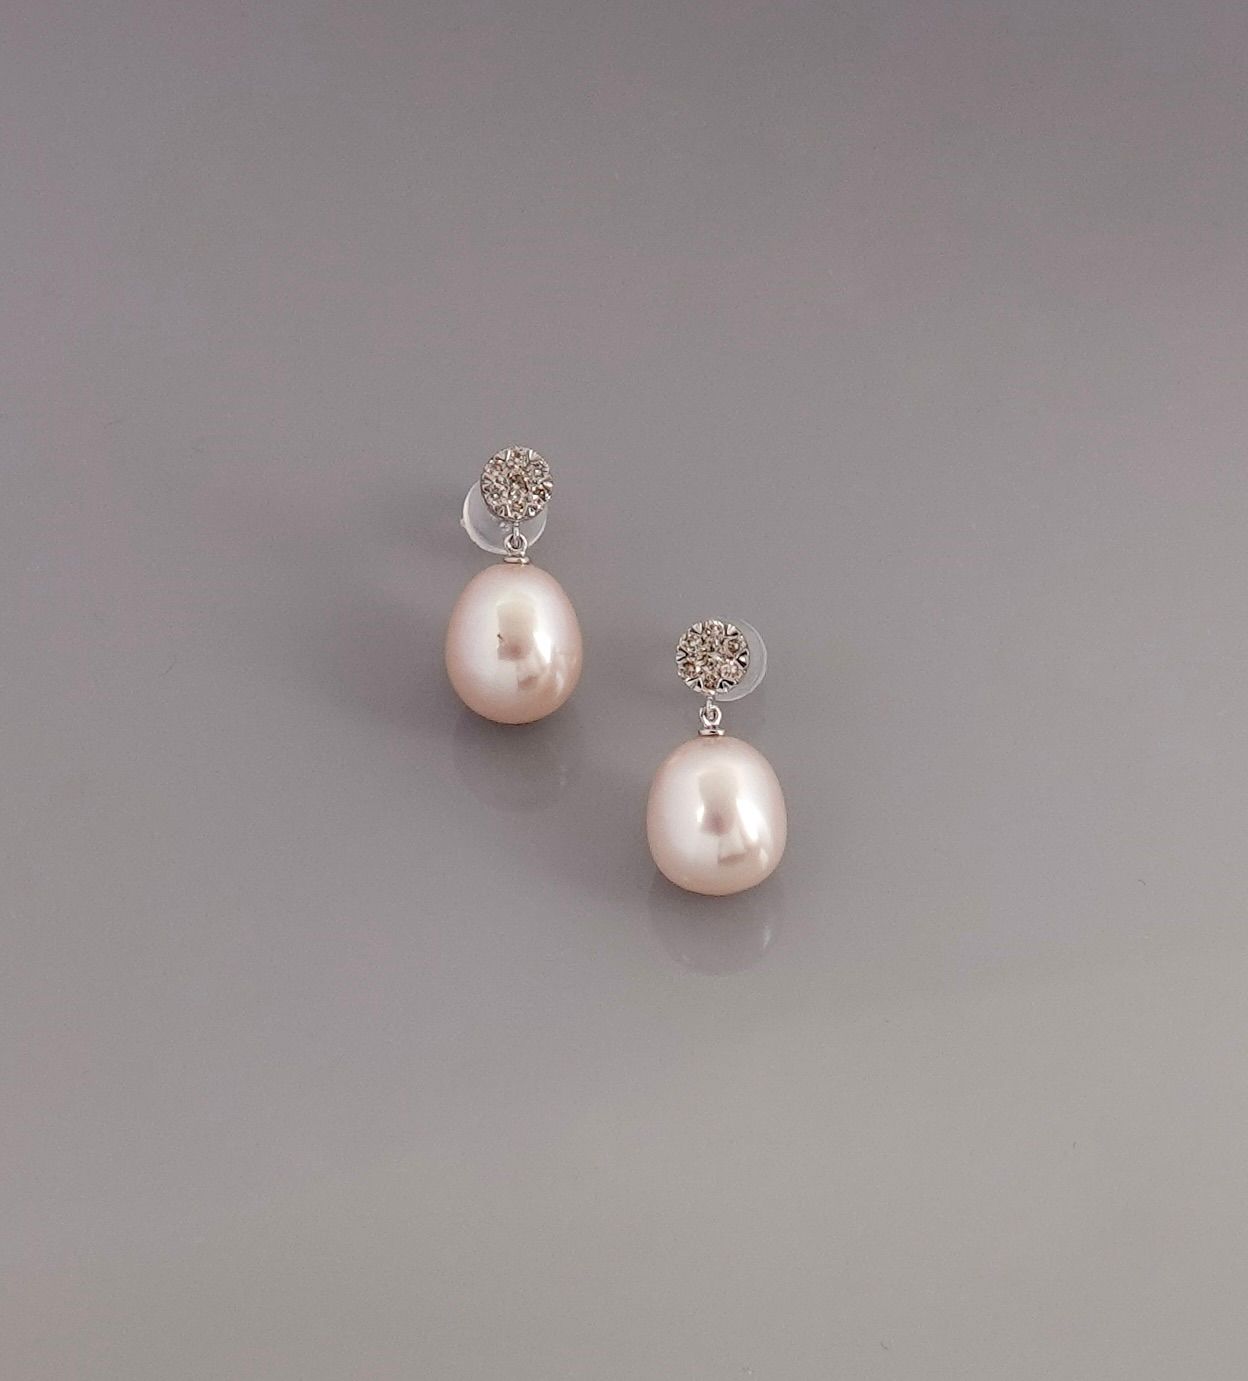 Null 白金耳环，750毫米，镶有一朵钻石花，每朵钻石花上有一颗椭圆形的珍珠，圆柱形硅胶扣，重量：2.6克。